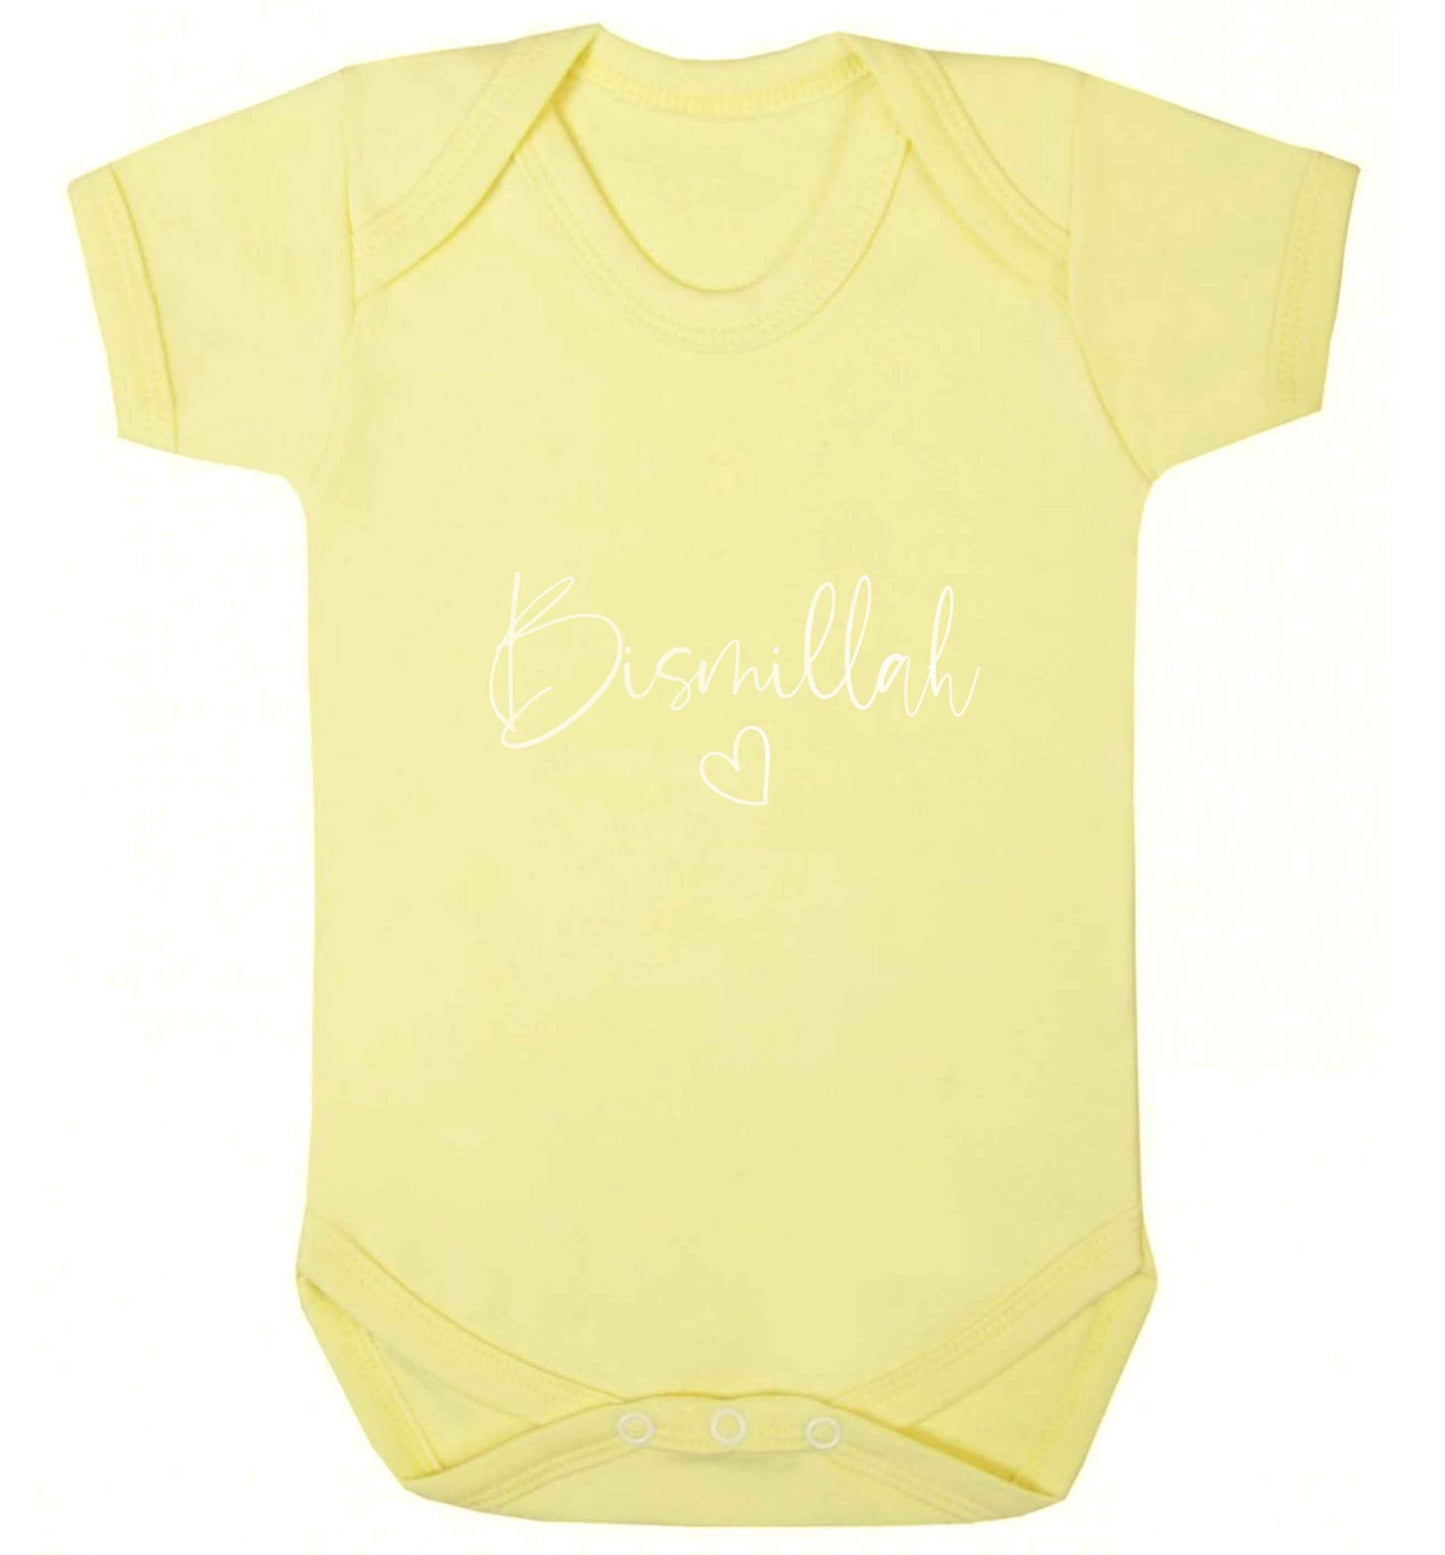 Bismillah baby vest pale yellow 18-24 months